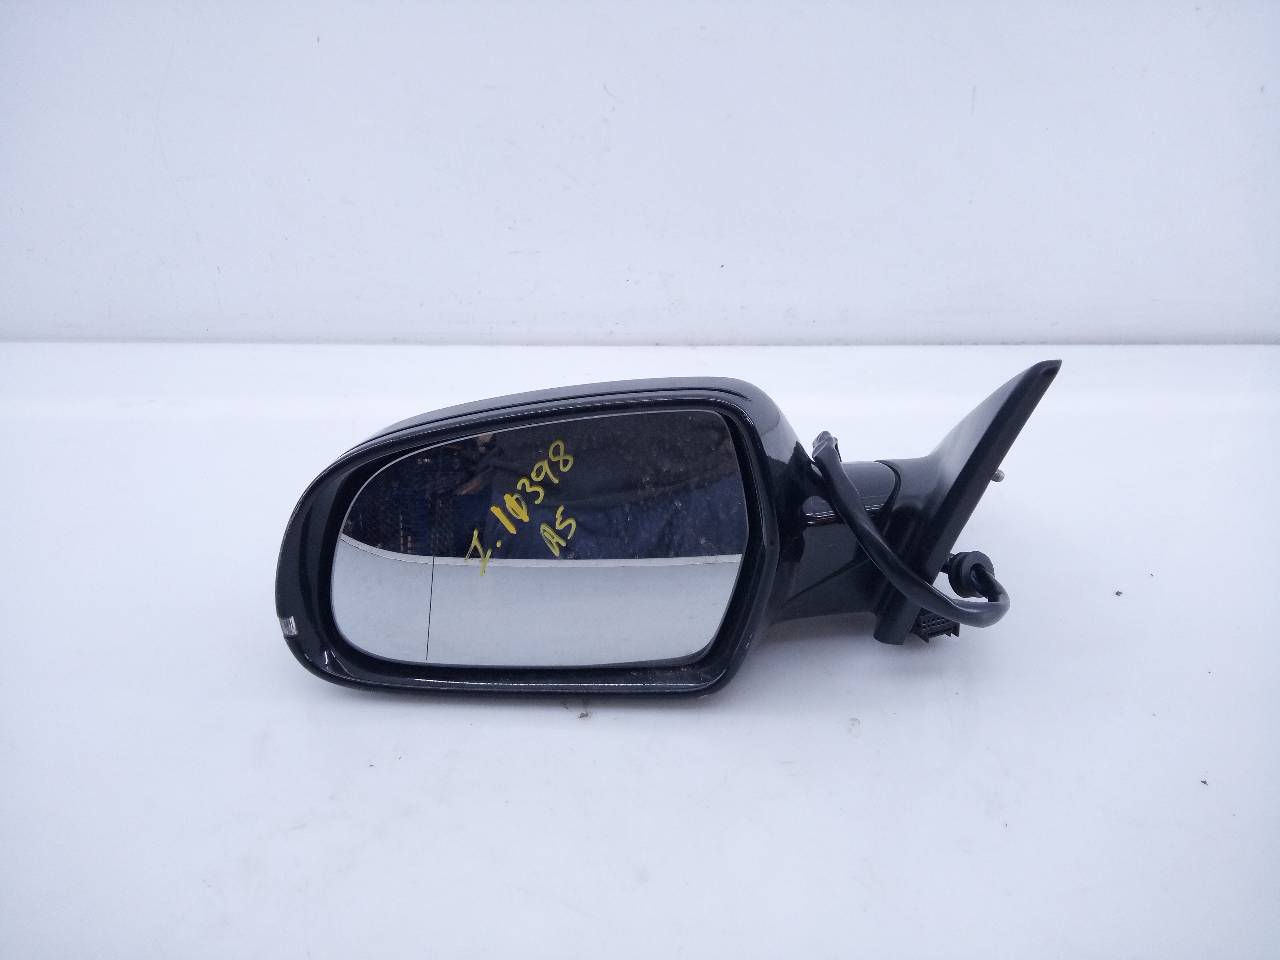 AUDI A5 Sportback Left Side Wing Mirror 18159, E1-B6-55-1 21824886